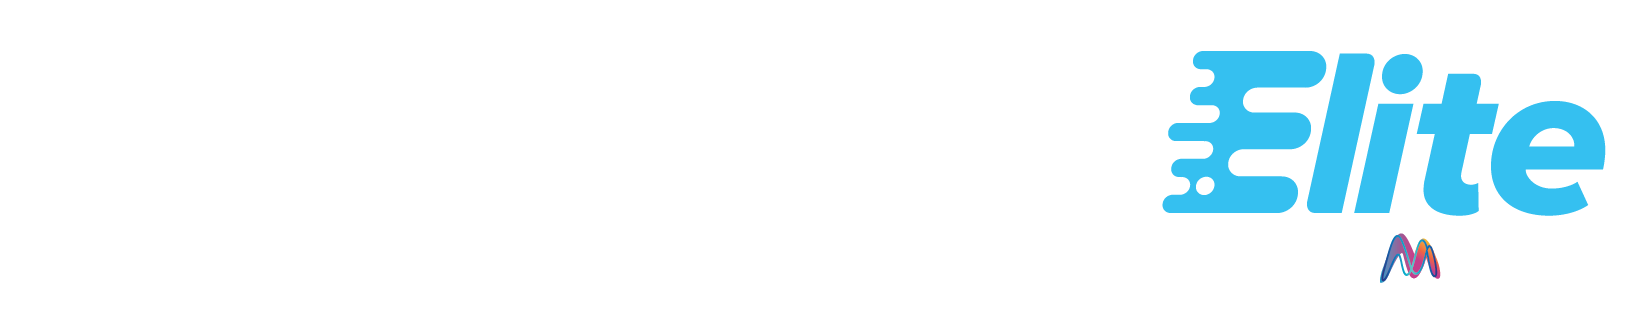 SHRM Survey Elite Logo